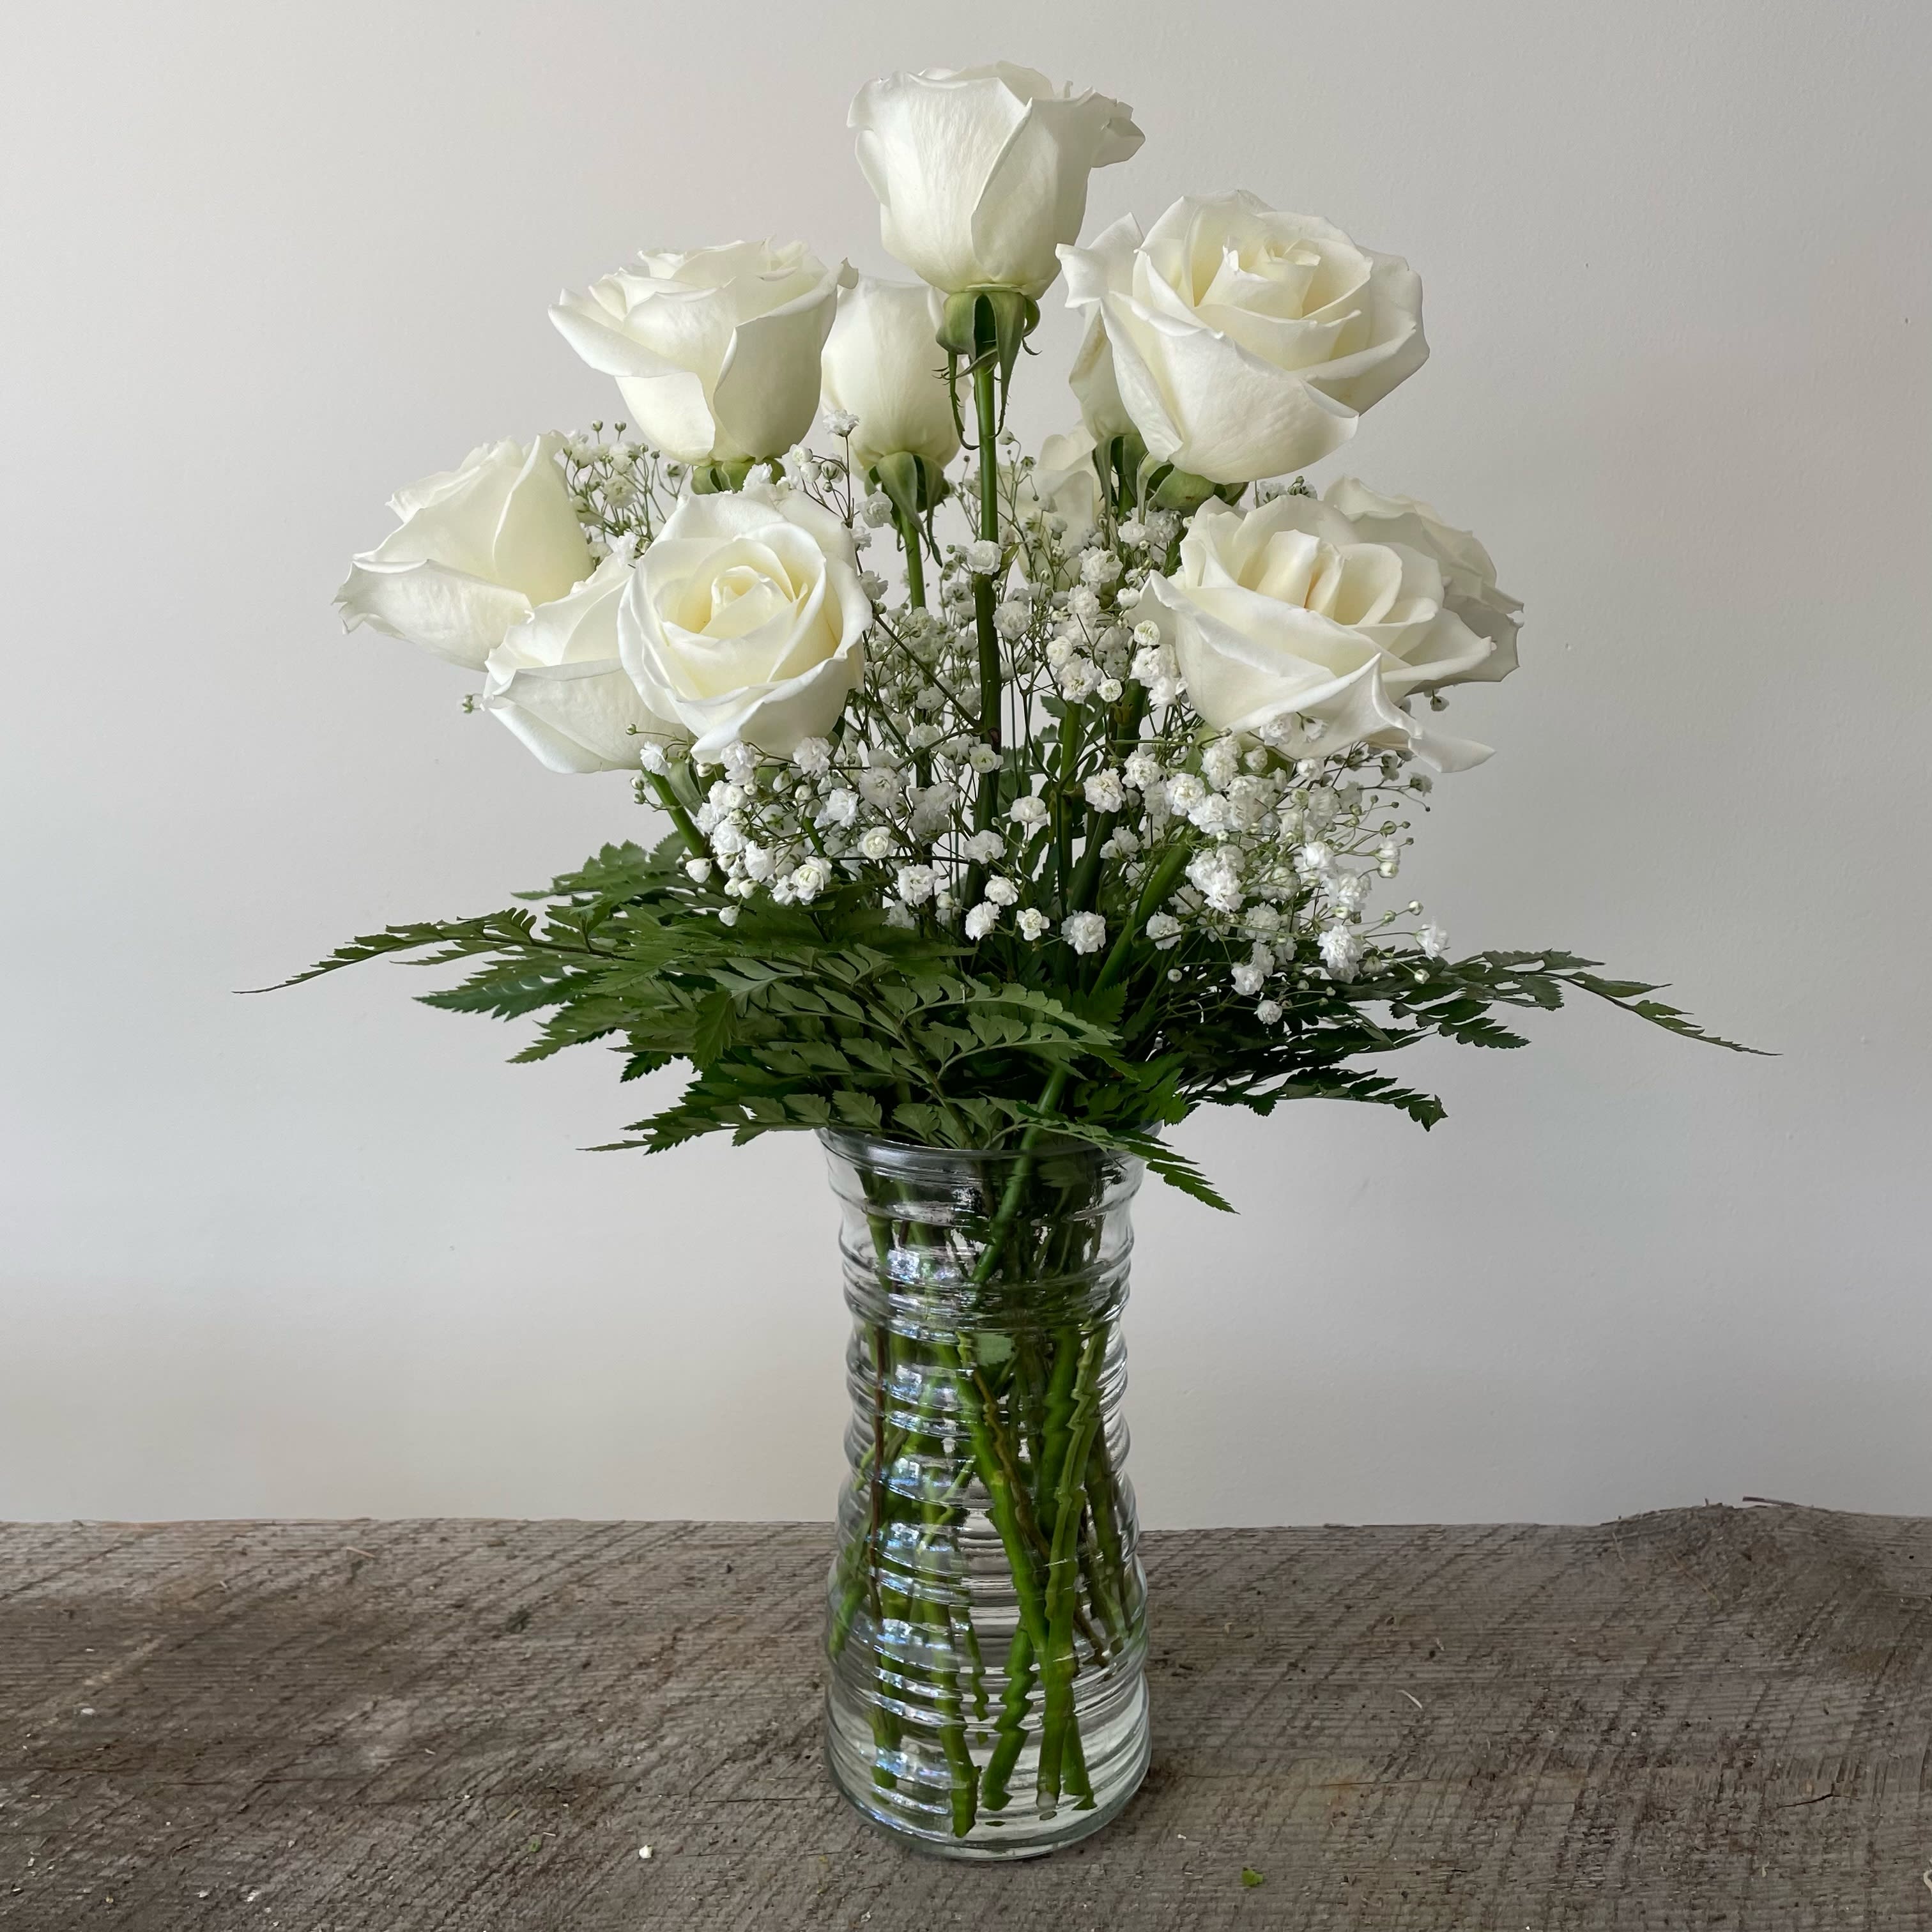 Dozen White Roses - White roses represent purity, innocence, and honor. Deluxe: 16 roses Premium: 20 roses